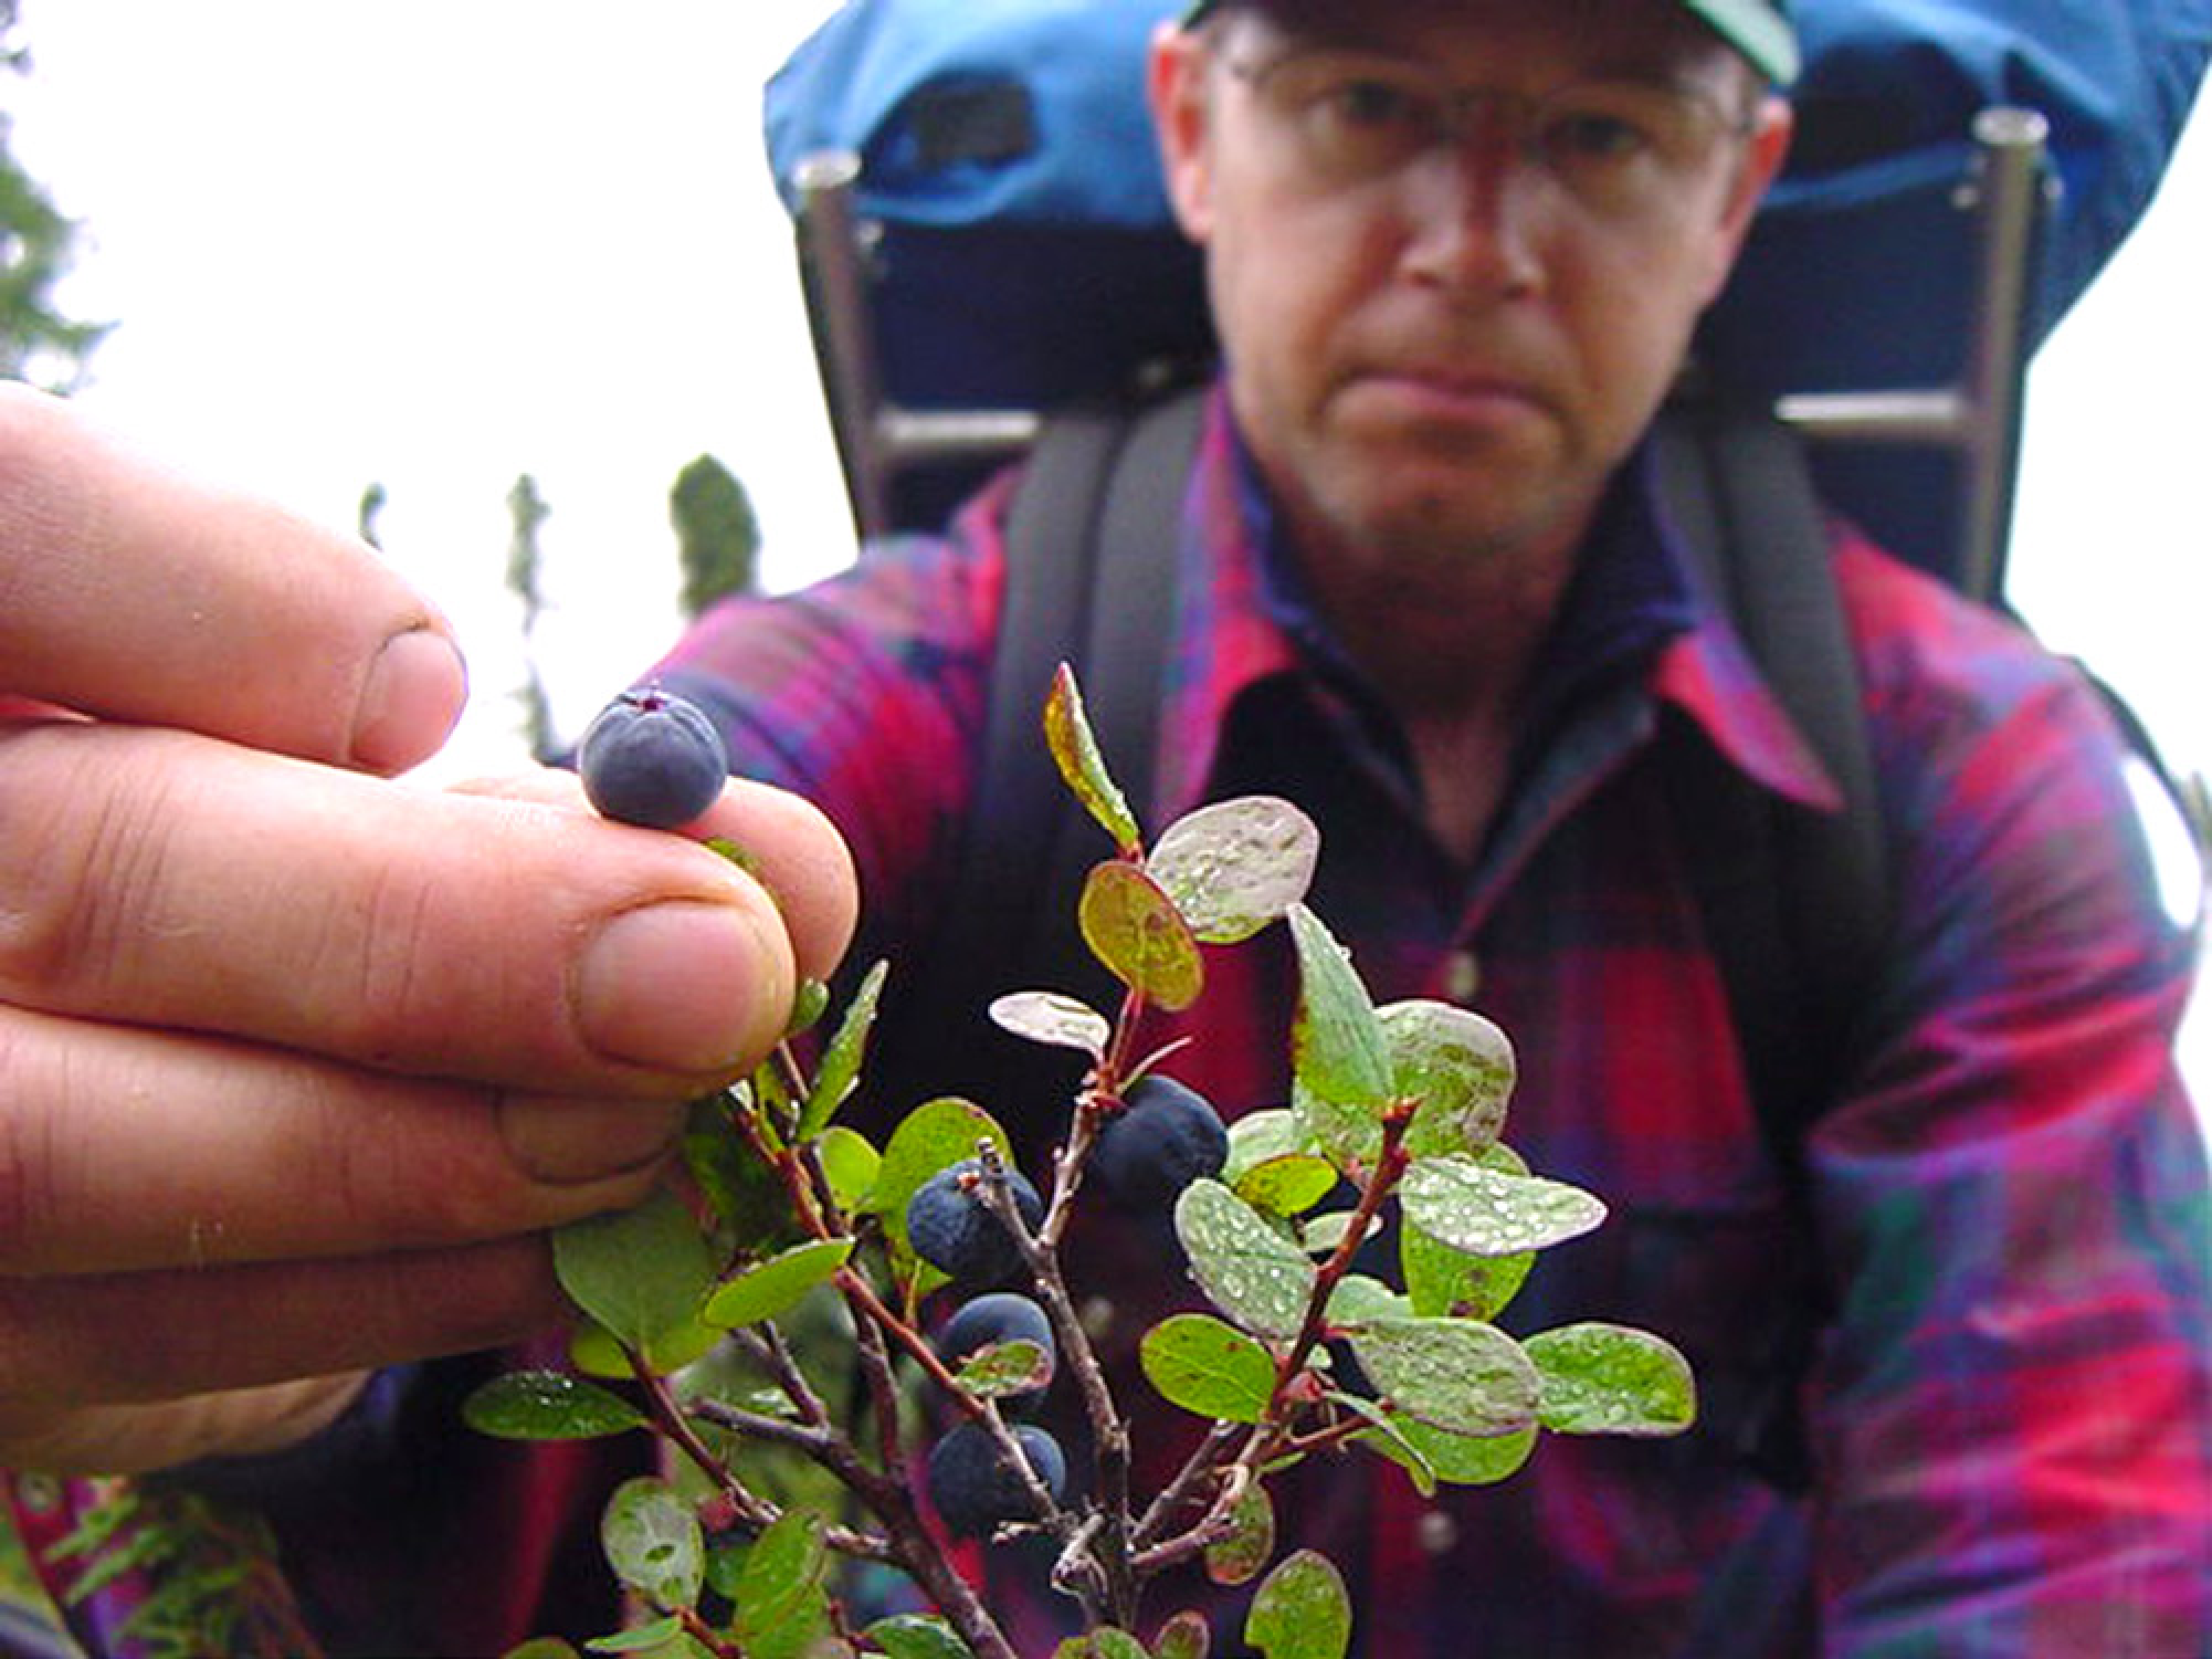 Holding blueberry plant